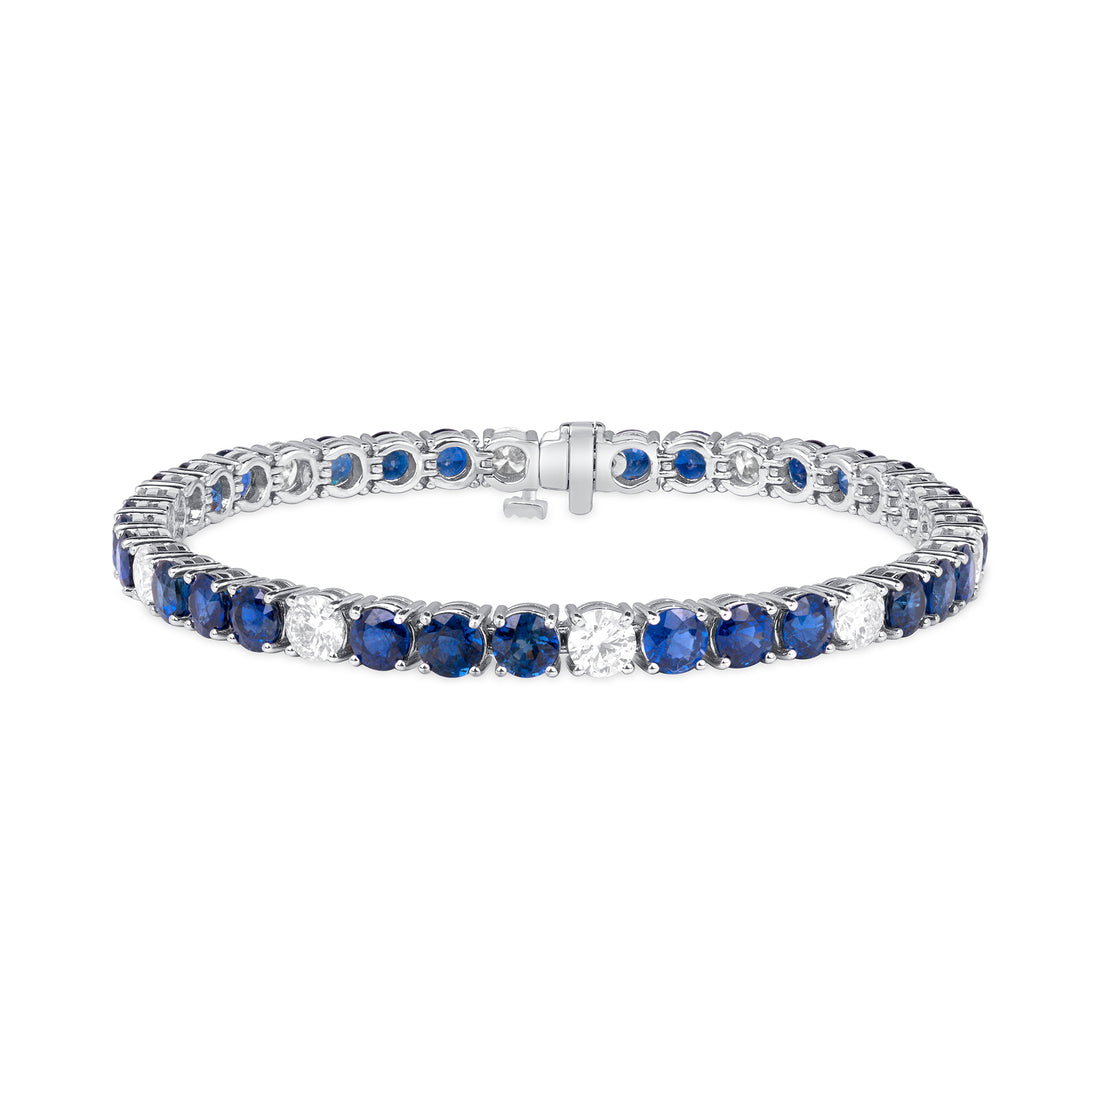 15.32 CT. Alternating Round Brilliant Blue Sapphire and Diamond Tennis Bracelet in 14K White Gold